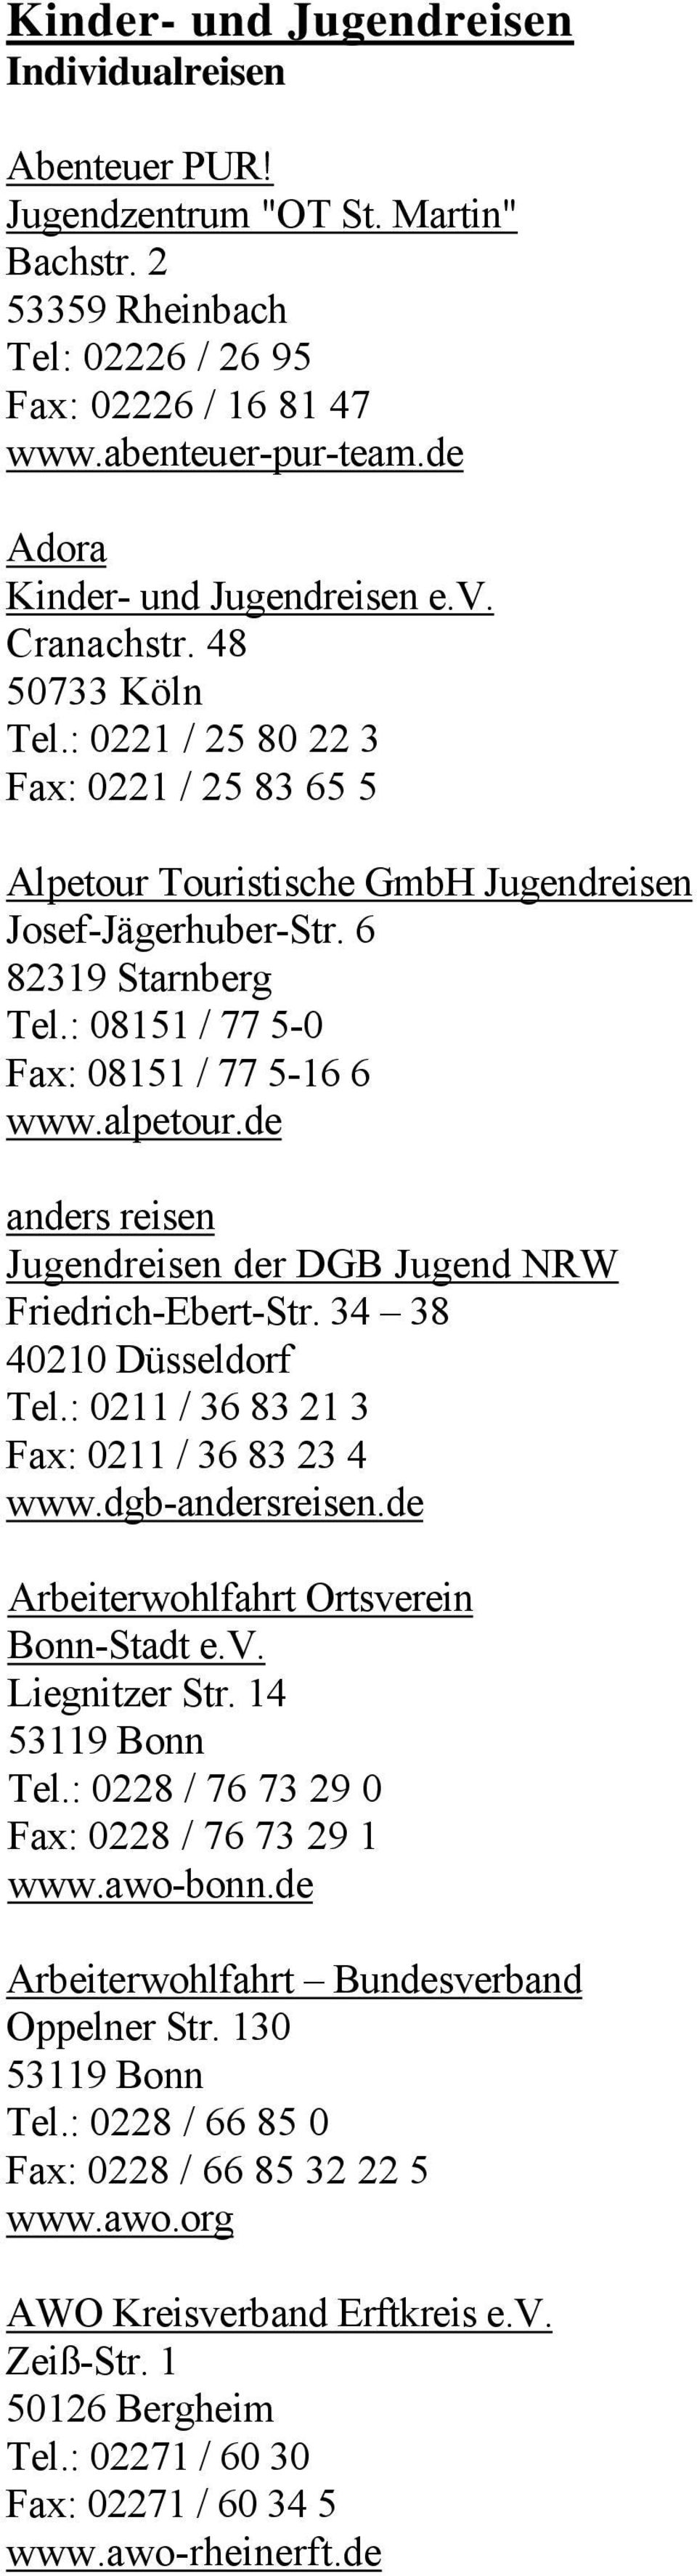 : 08151 / 77 5-0 Fax: 08151 / 77 5-16 6 www.alpetour.de anders reisen Jugendreisen der DGB Jugend NRW Friedrich-Ebert-Str. 34 38 40210 Düsseldorf Tel.: 0211 / 36 83 21 3 Fax: 0211 / 36 83 23 4 www.